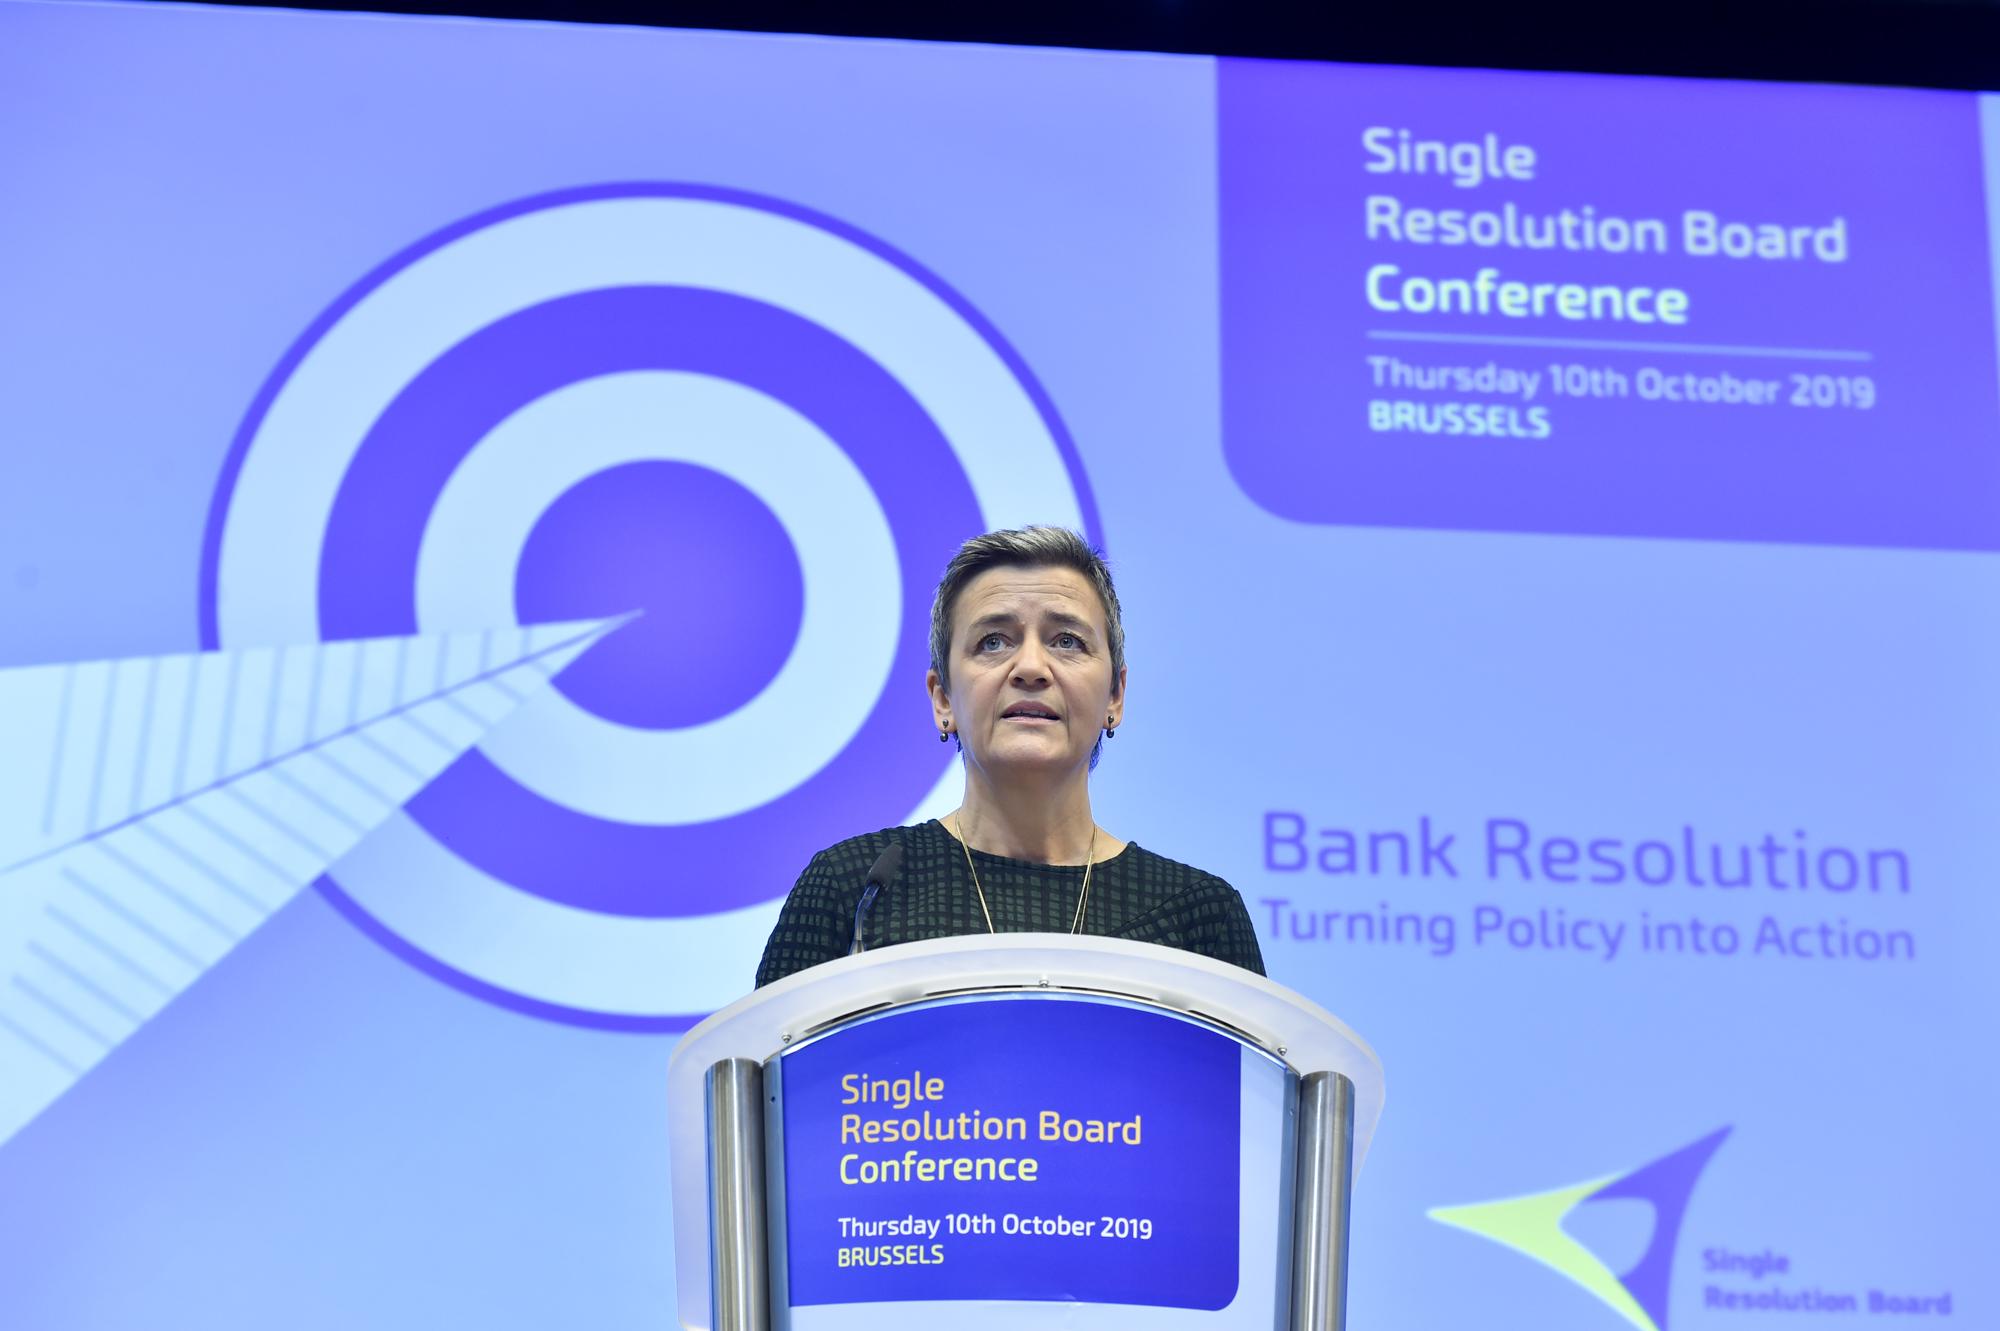 Opening Address, Magrethe Vestager, Commissioner for Competition, European Commission